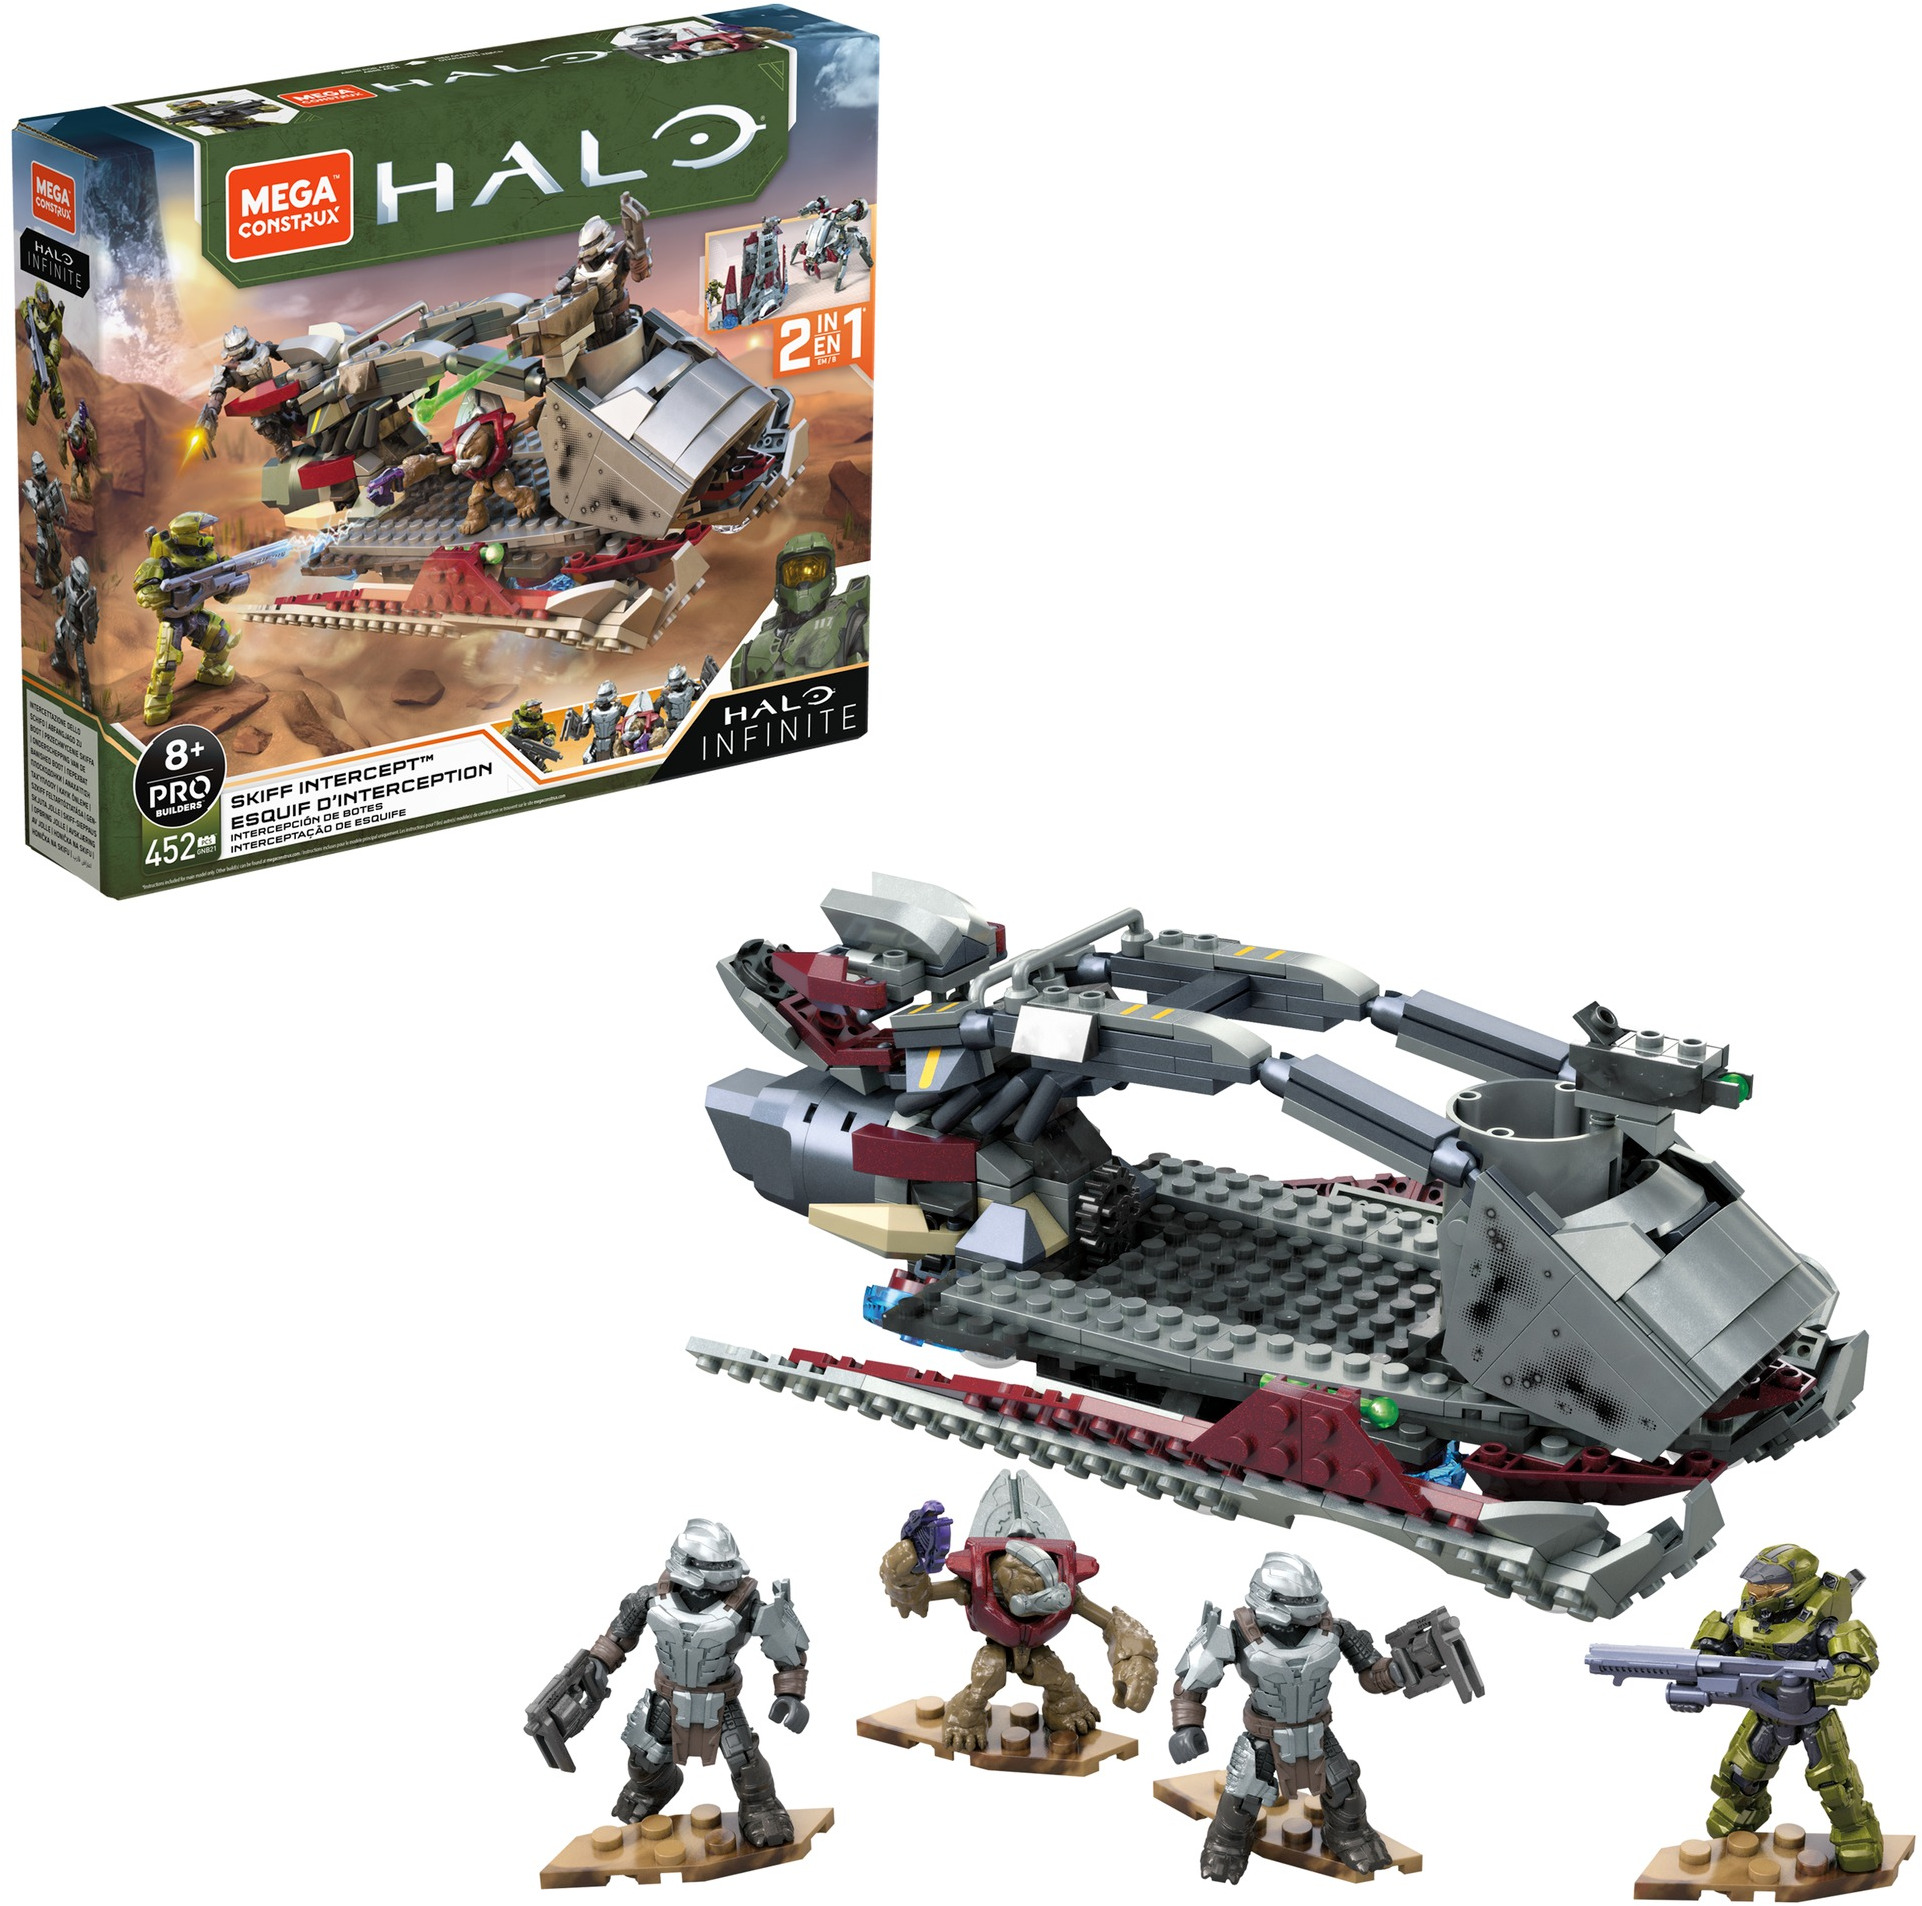 MEGA Halo Skift Intercept Building Kit with Spartan MK VII Action Figure (452 Pieces) - image 1 of 7